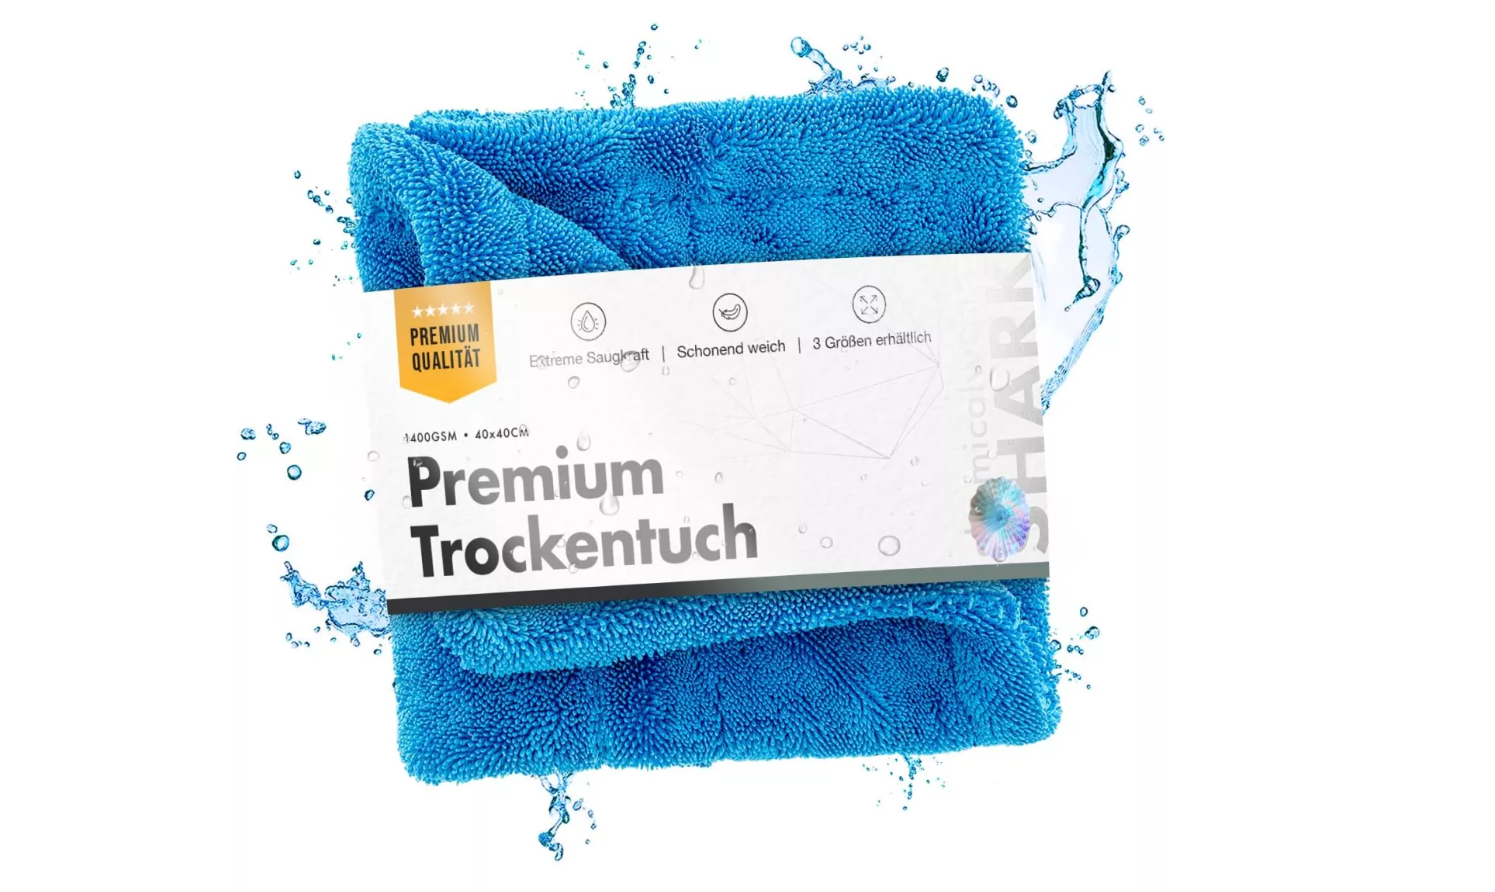 chemicalworkz Blue Shark Twisted Towel Premium Trockentuch 1400GSM